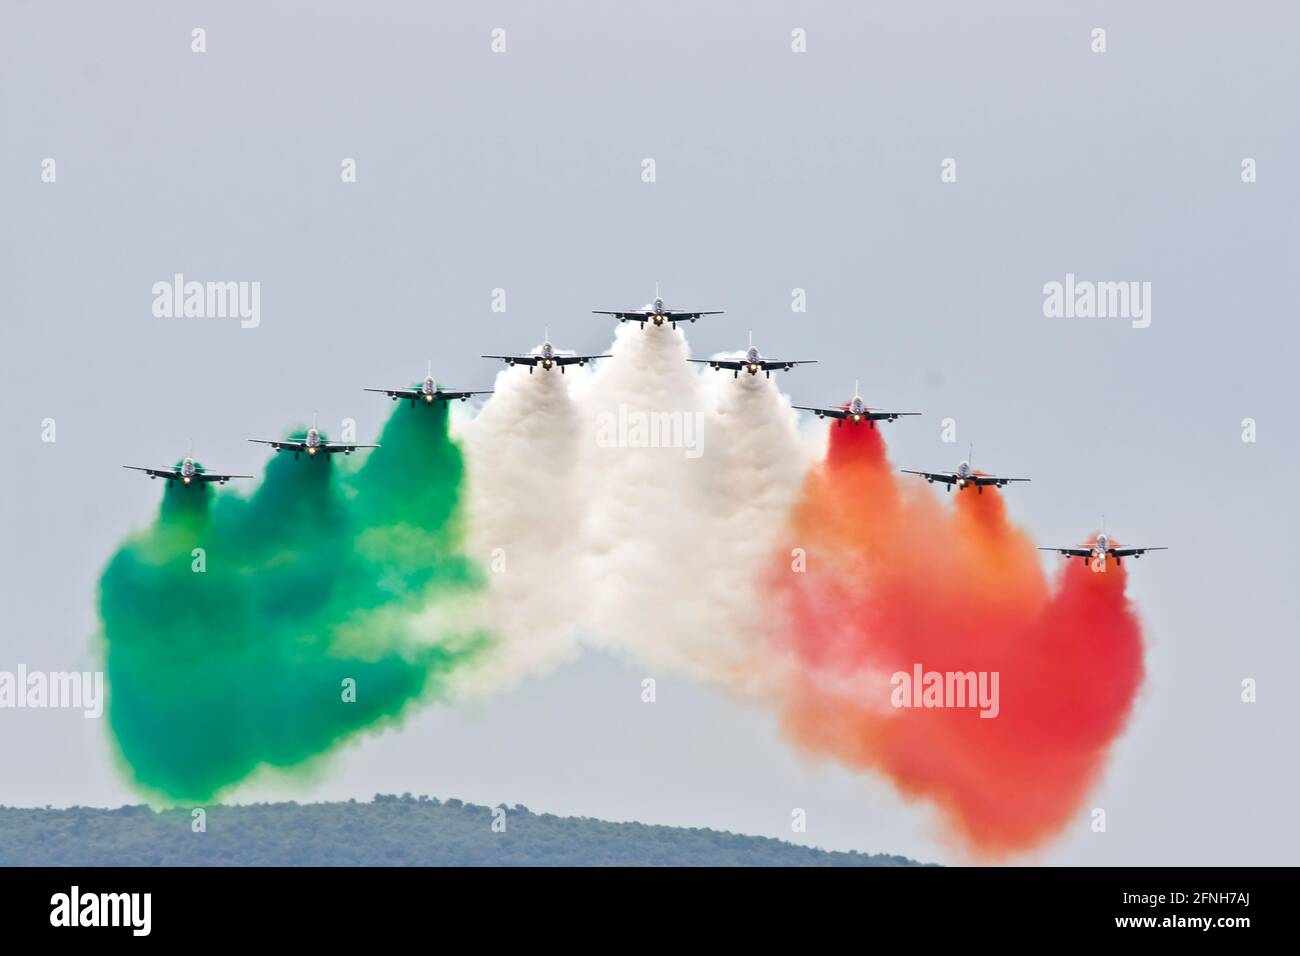 VIGNA DI VALLE, ROME, ITALY - JUNE 1, 2008: Performance of the Italian airforce aerobatics team Stock Photo